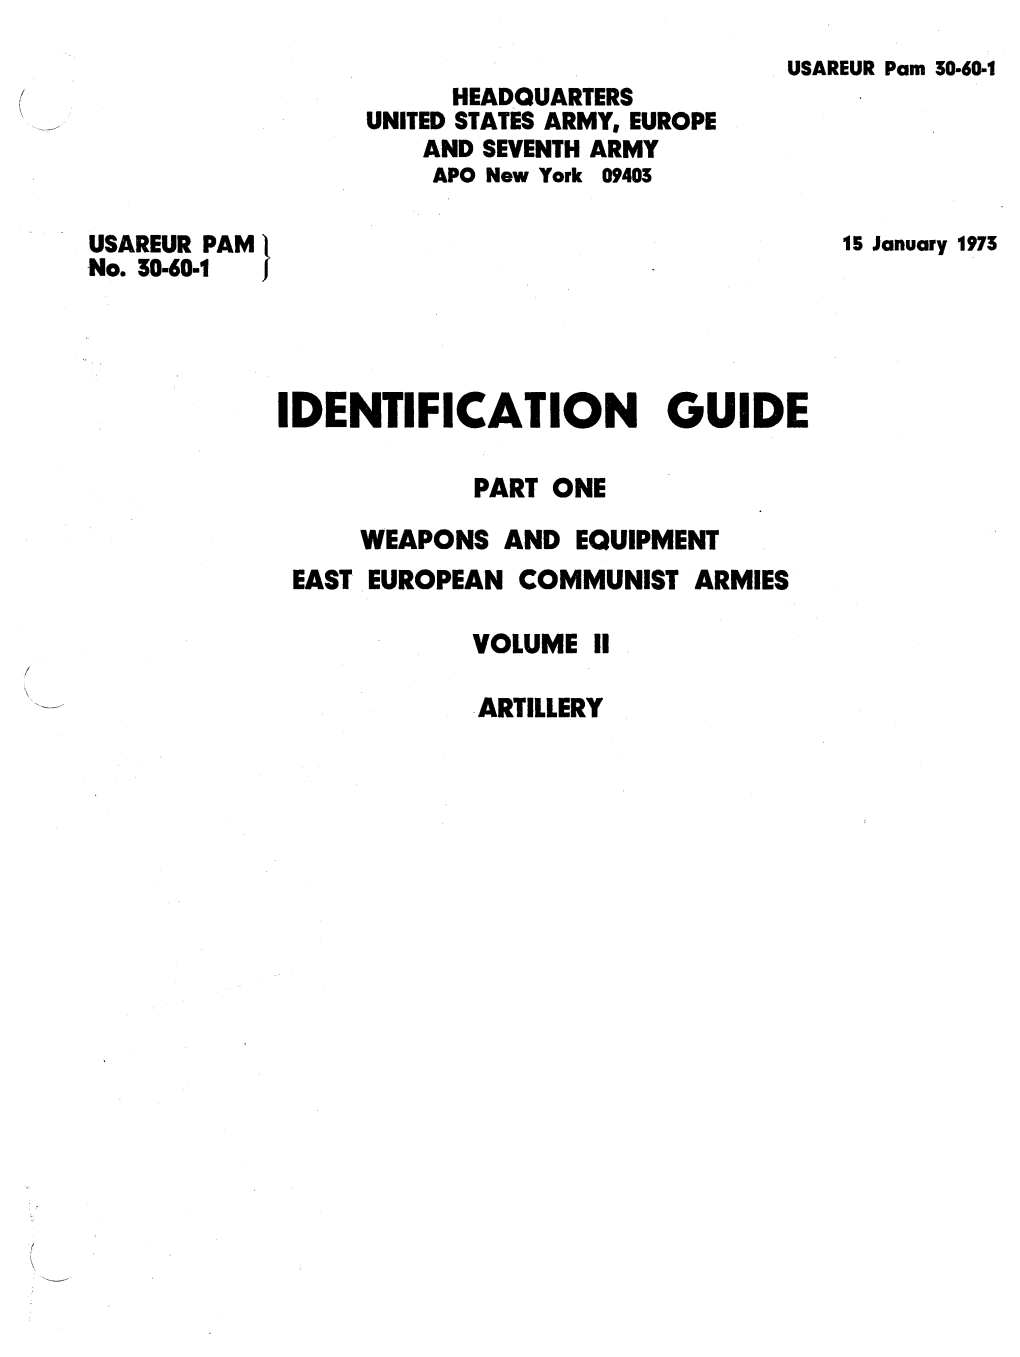 Identification Guide